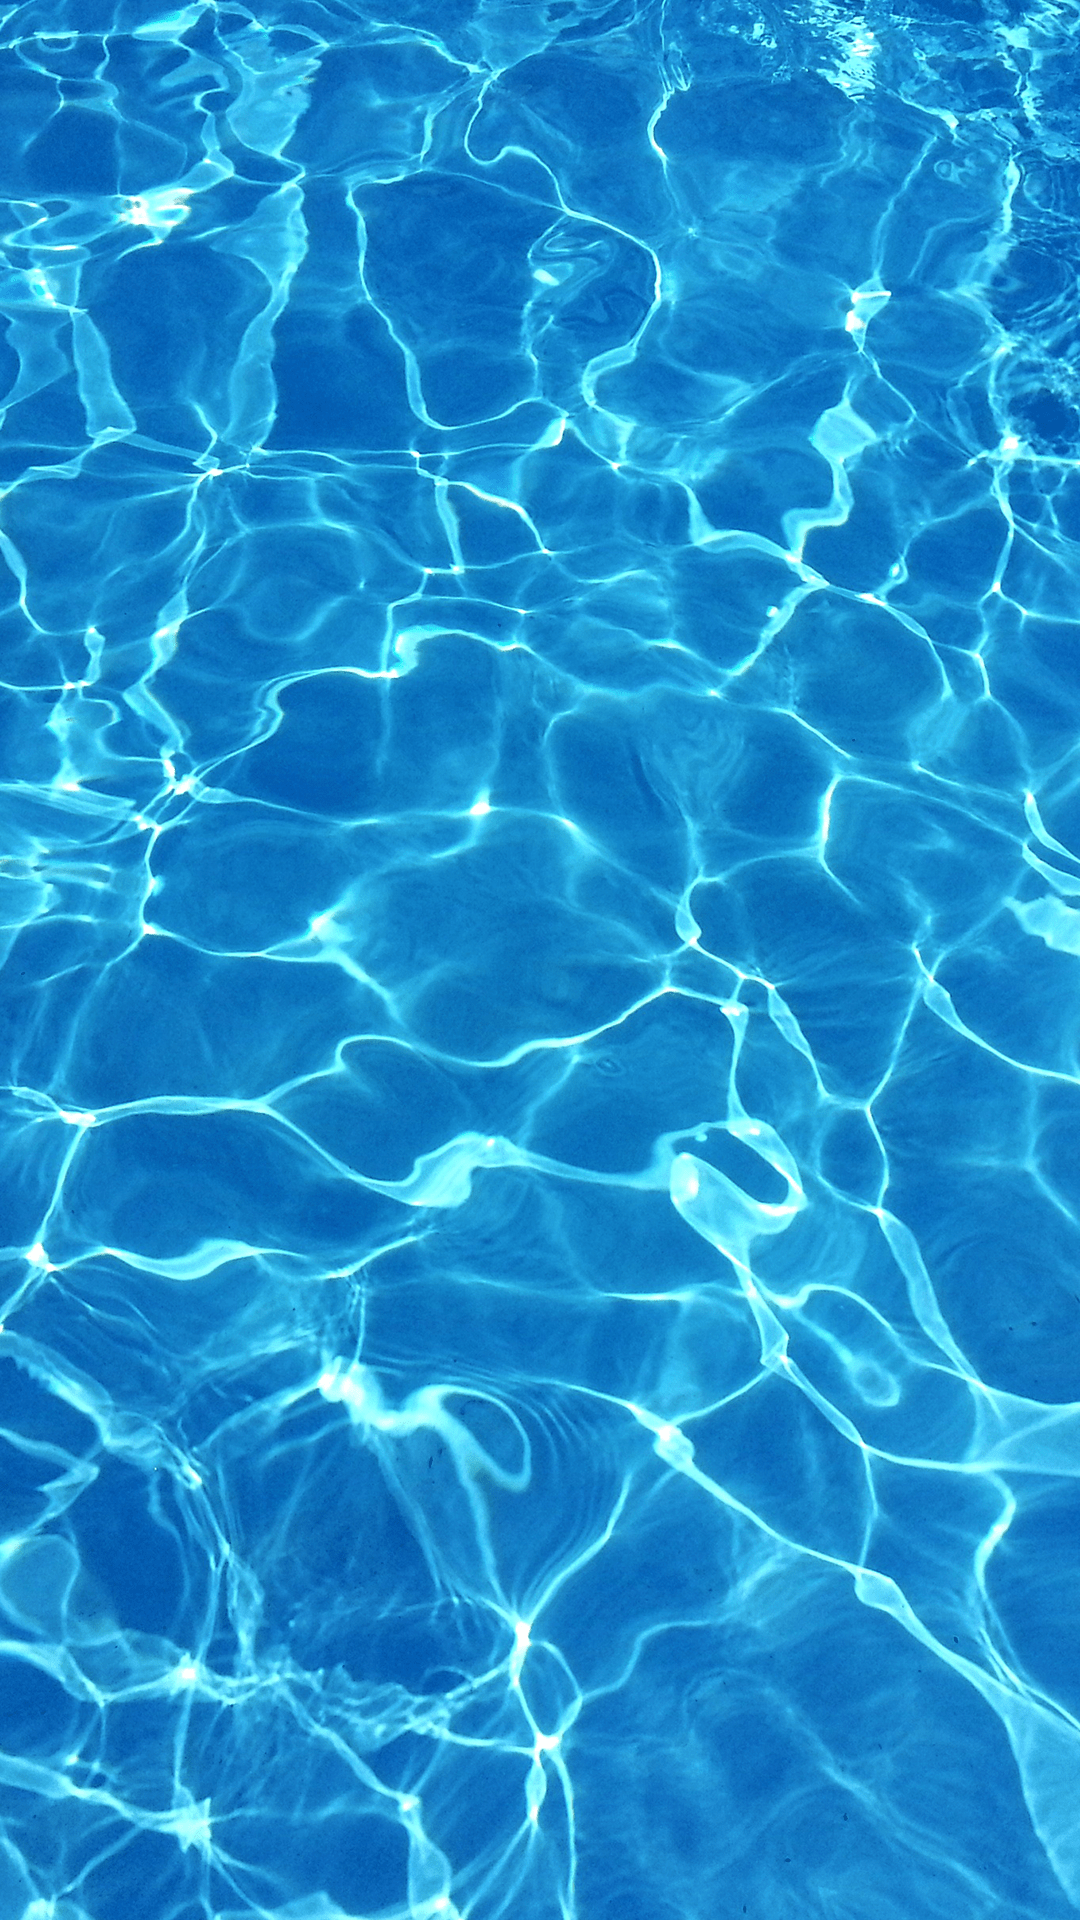 Pool Water iPhone Wallpaper